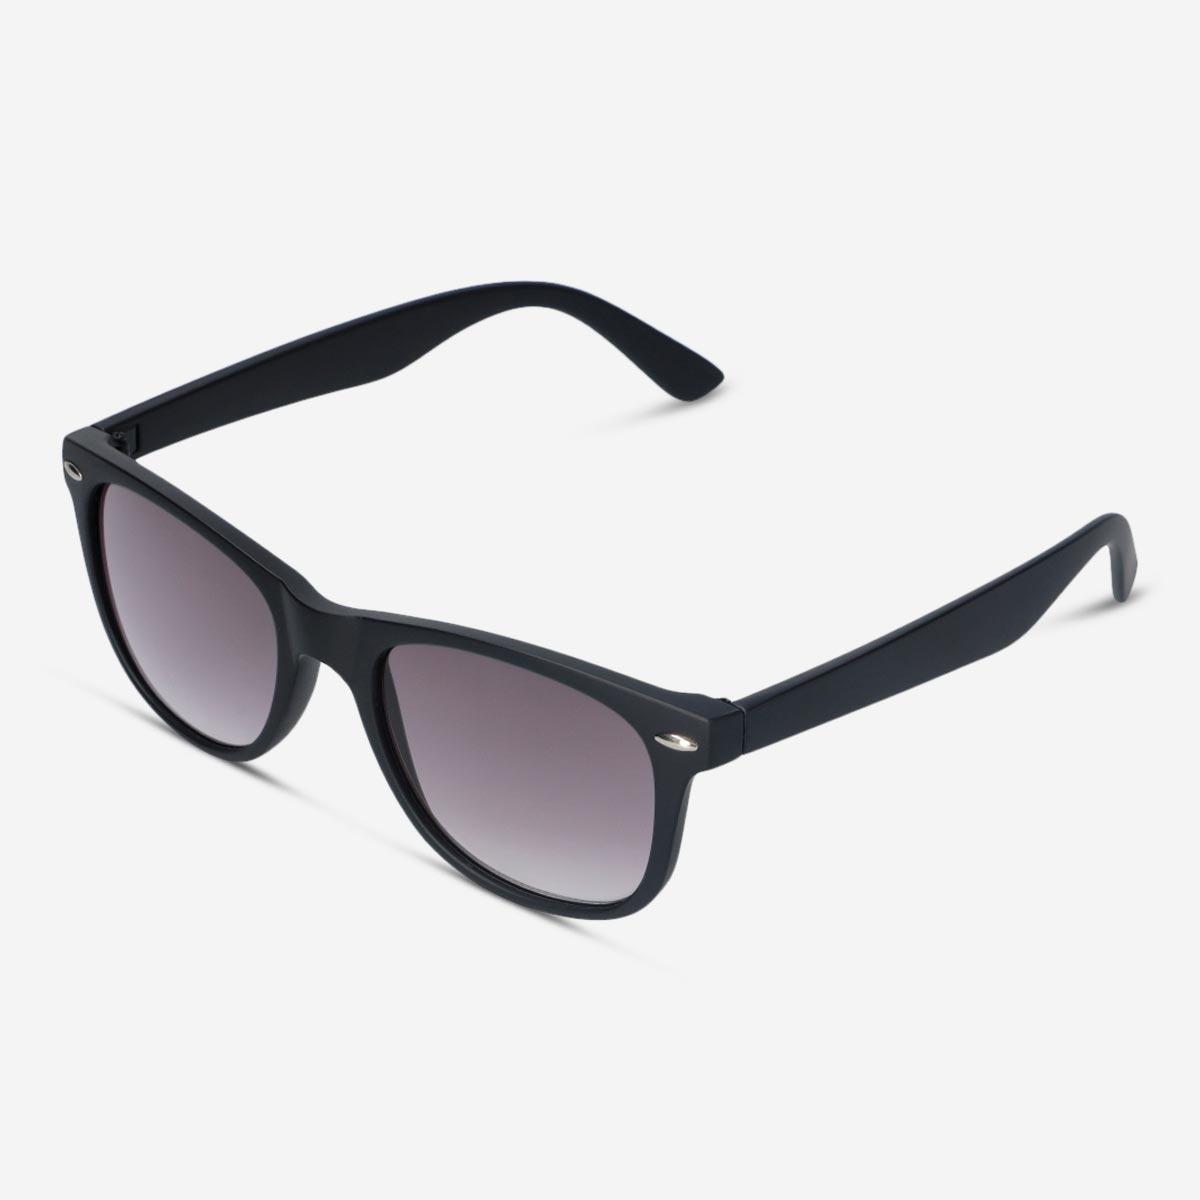 Black reading sunglasses. + 1.0